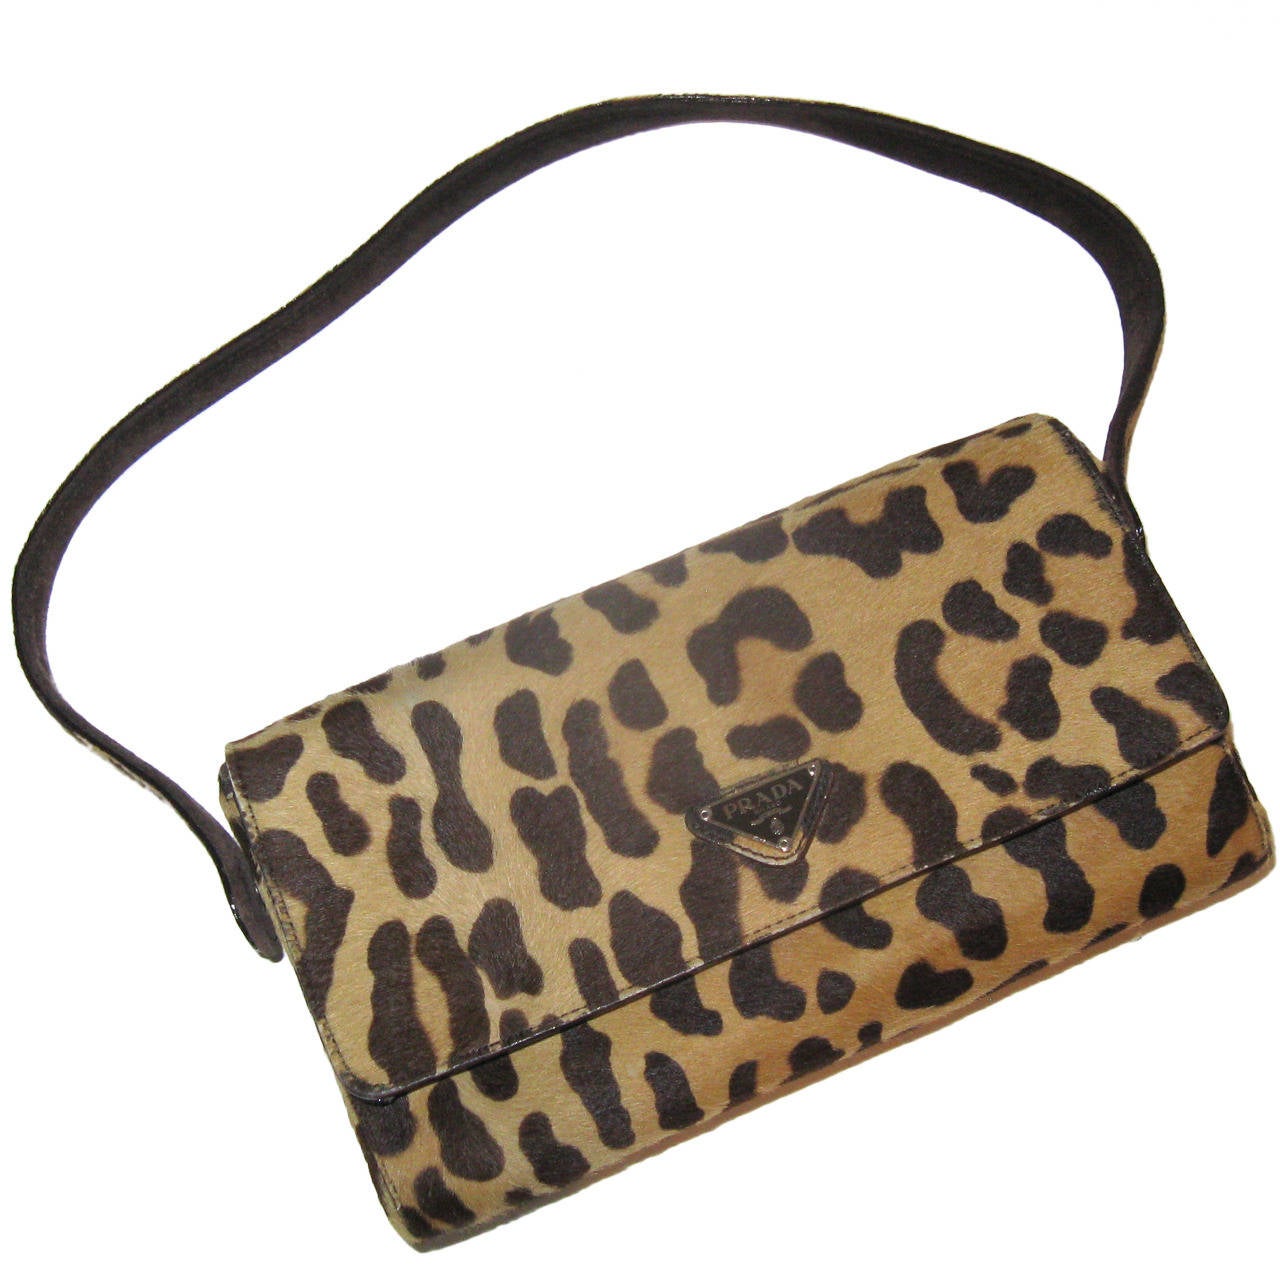 Stenciled Leopard Hide Baguette Bag by Prada. For Sale